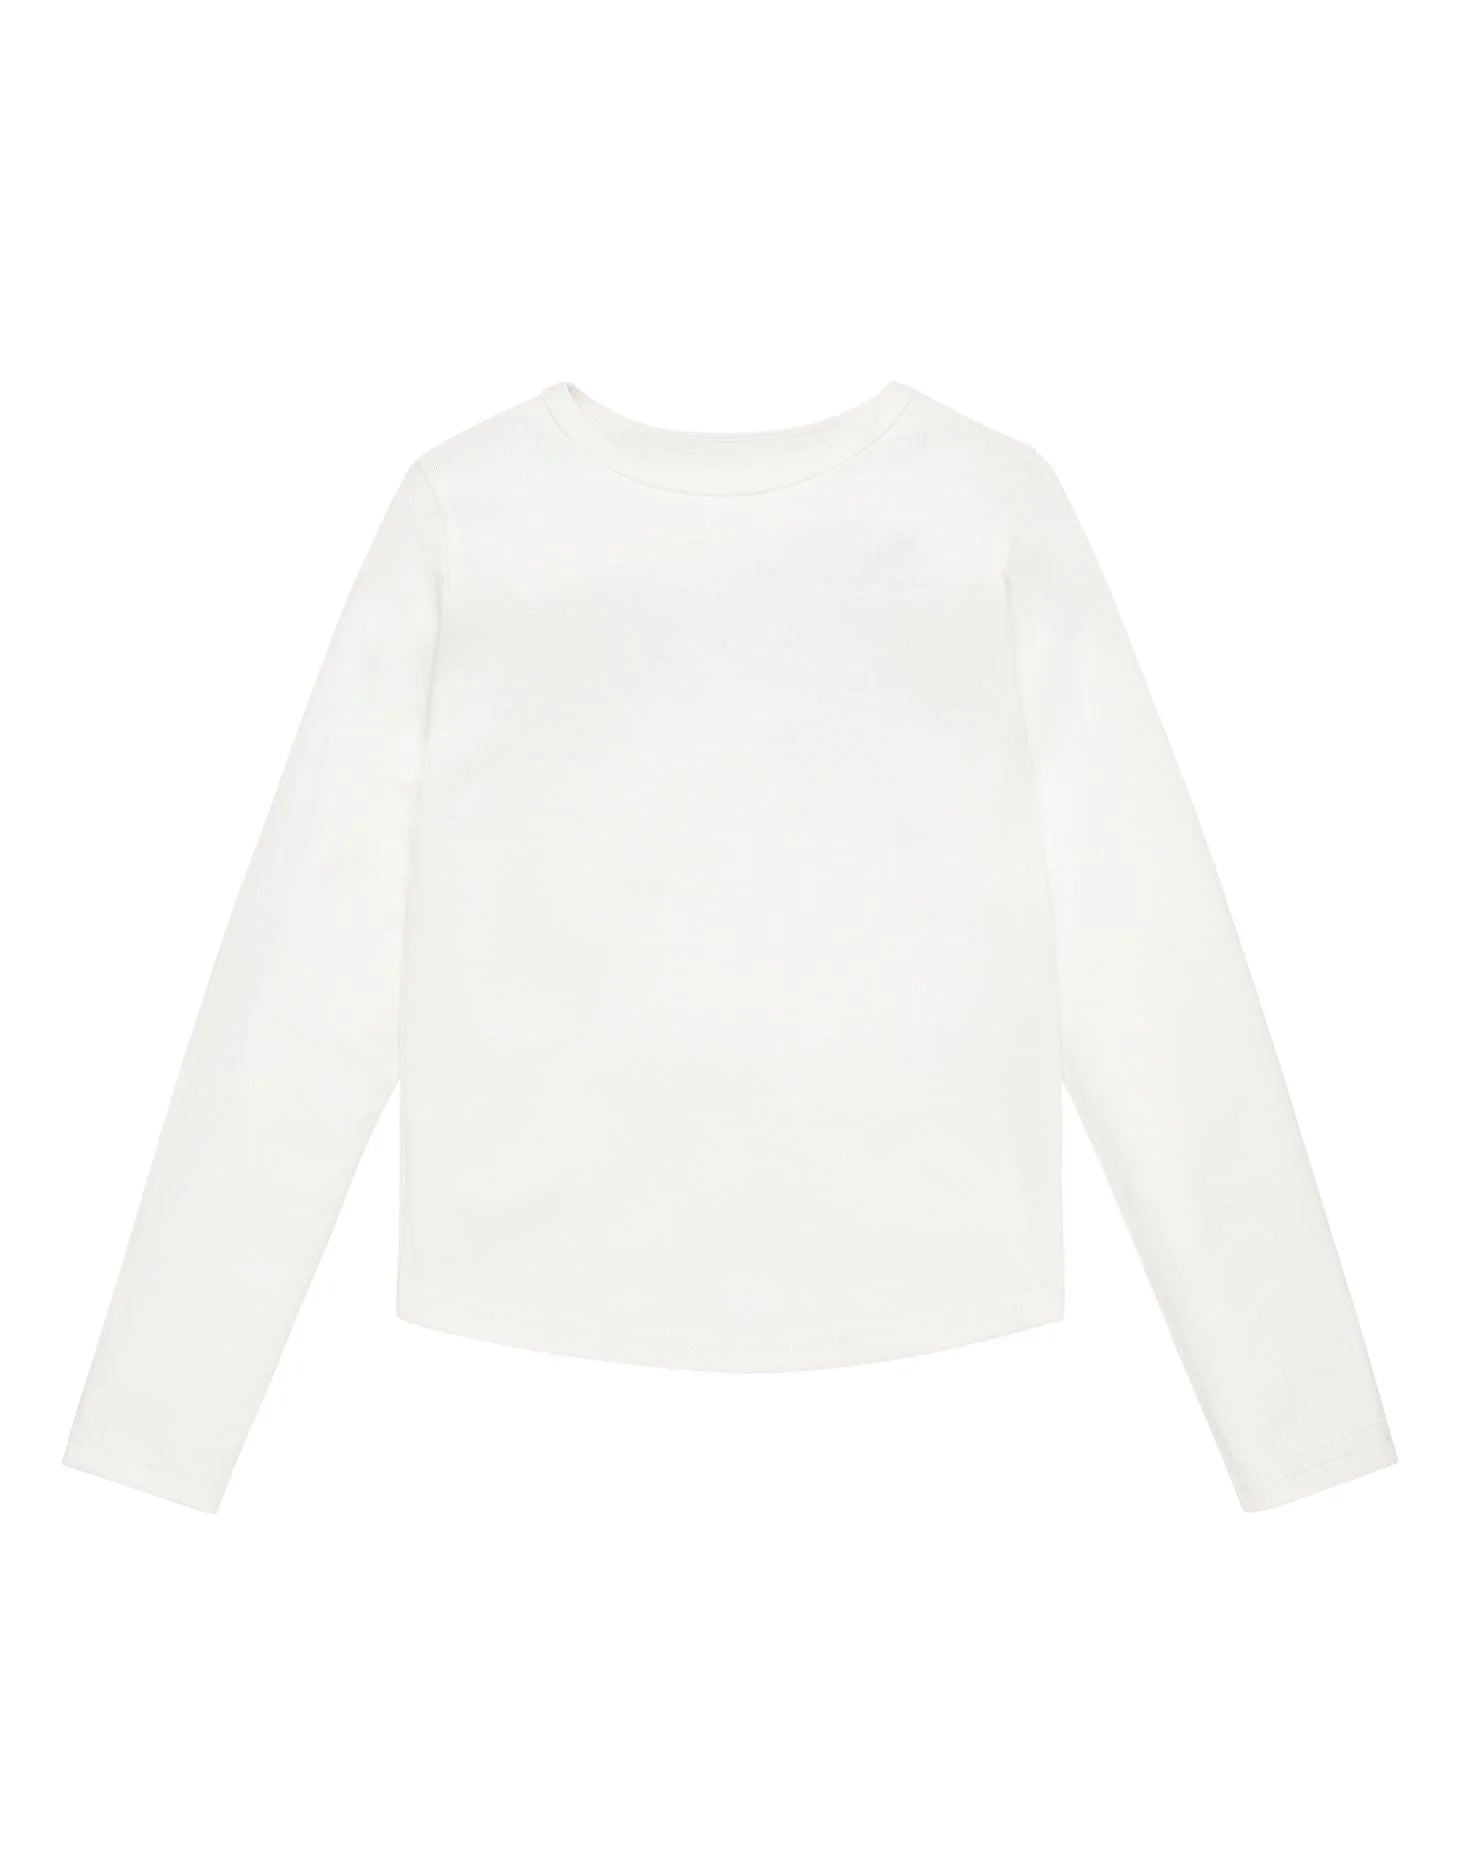 Smalls Merino Long Sleeve Top  | Ivory White